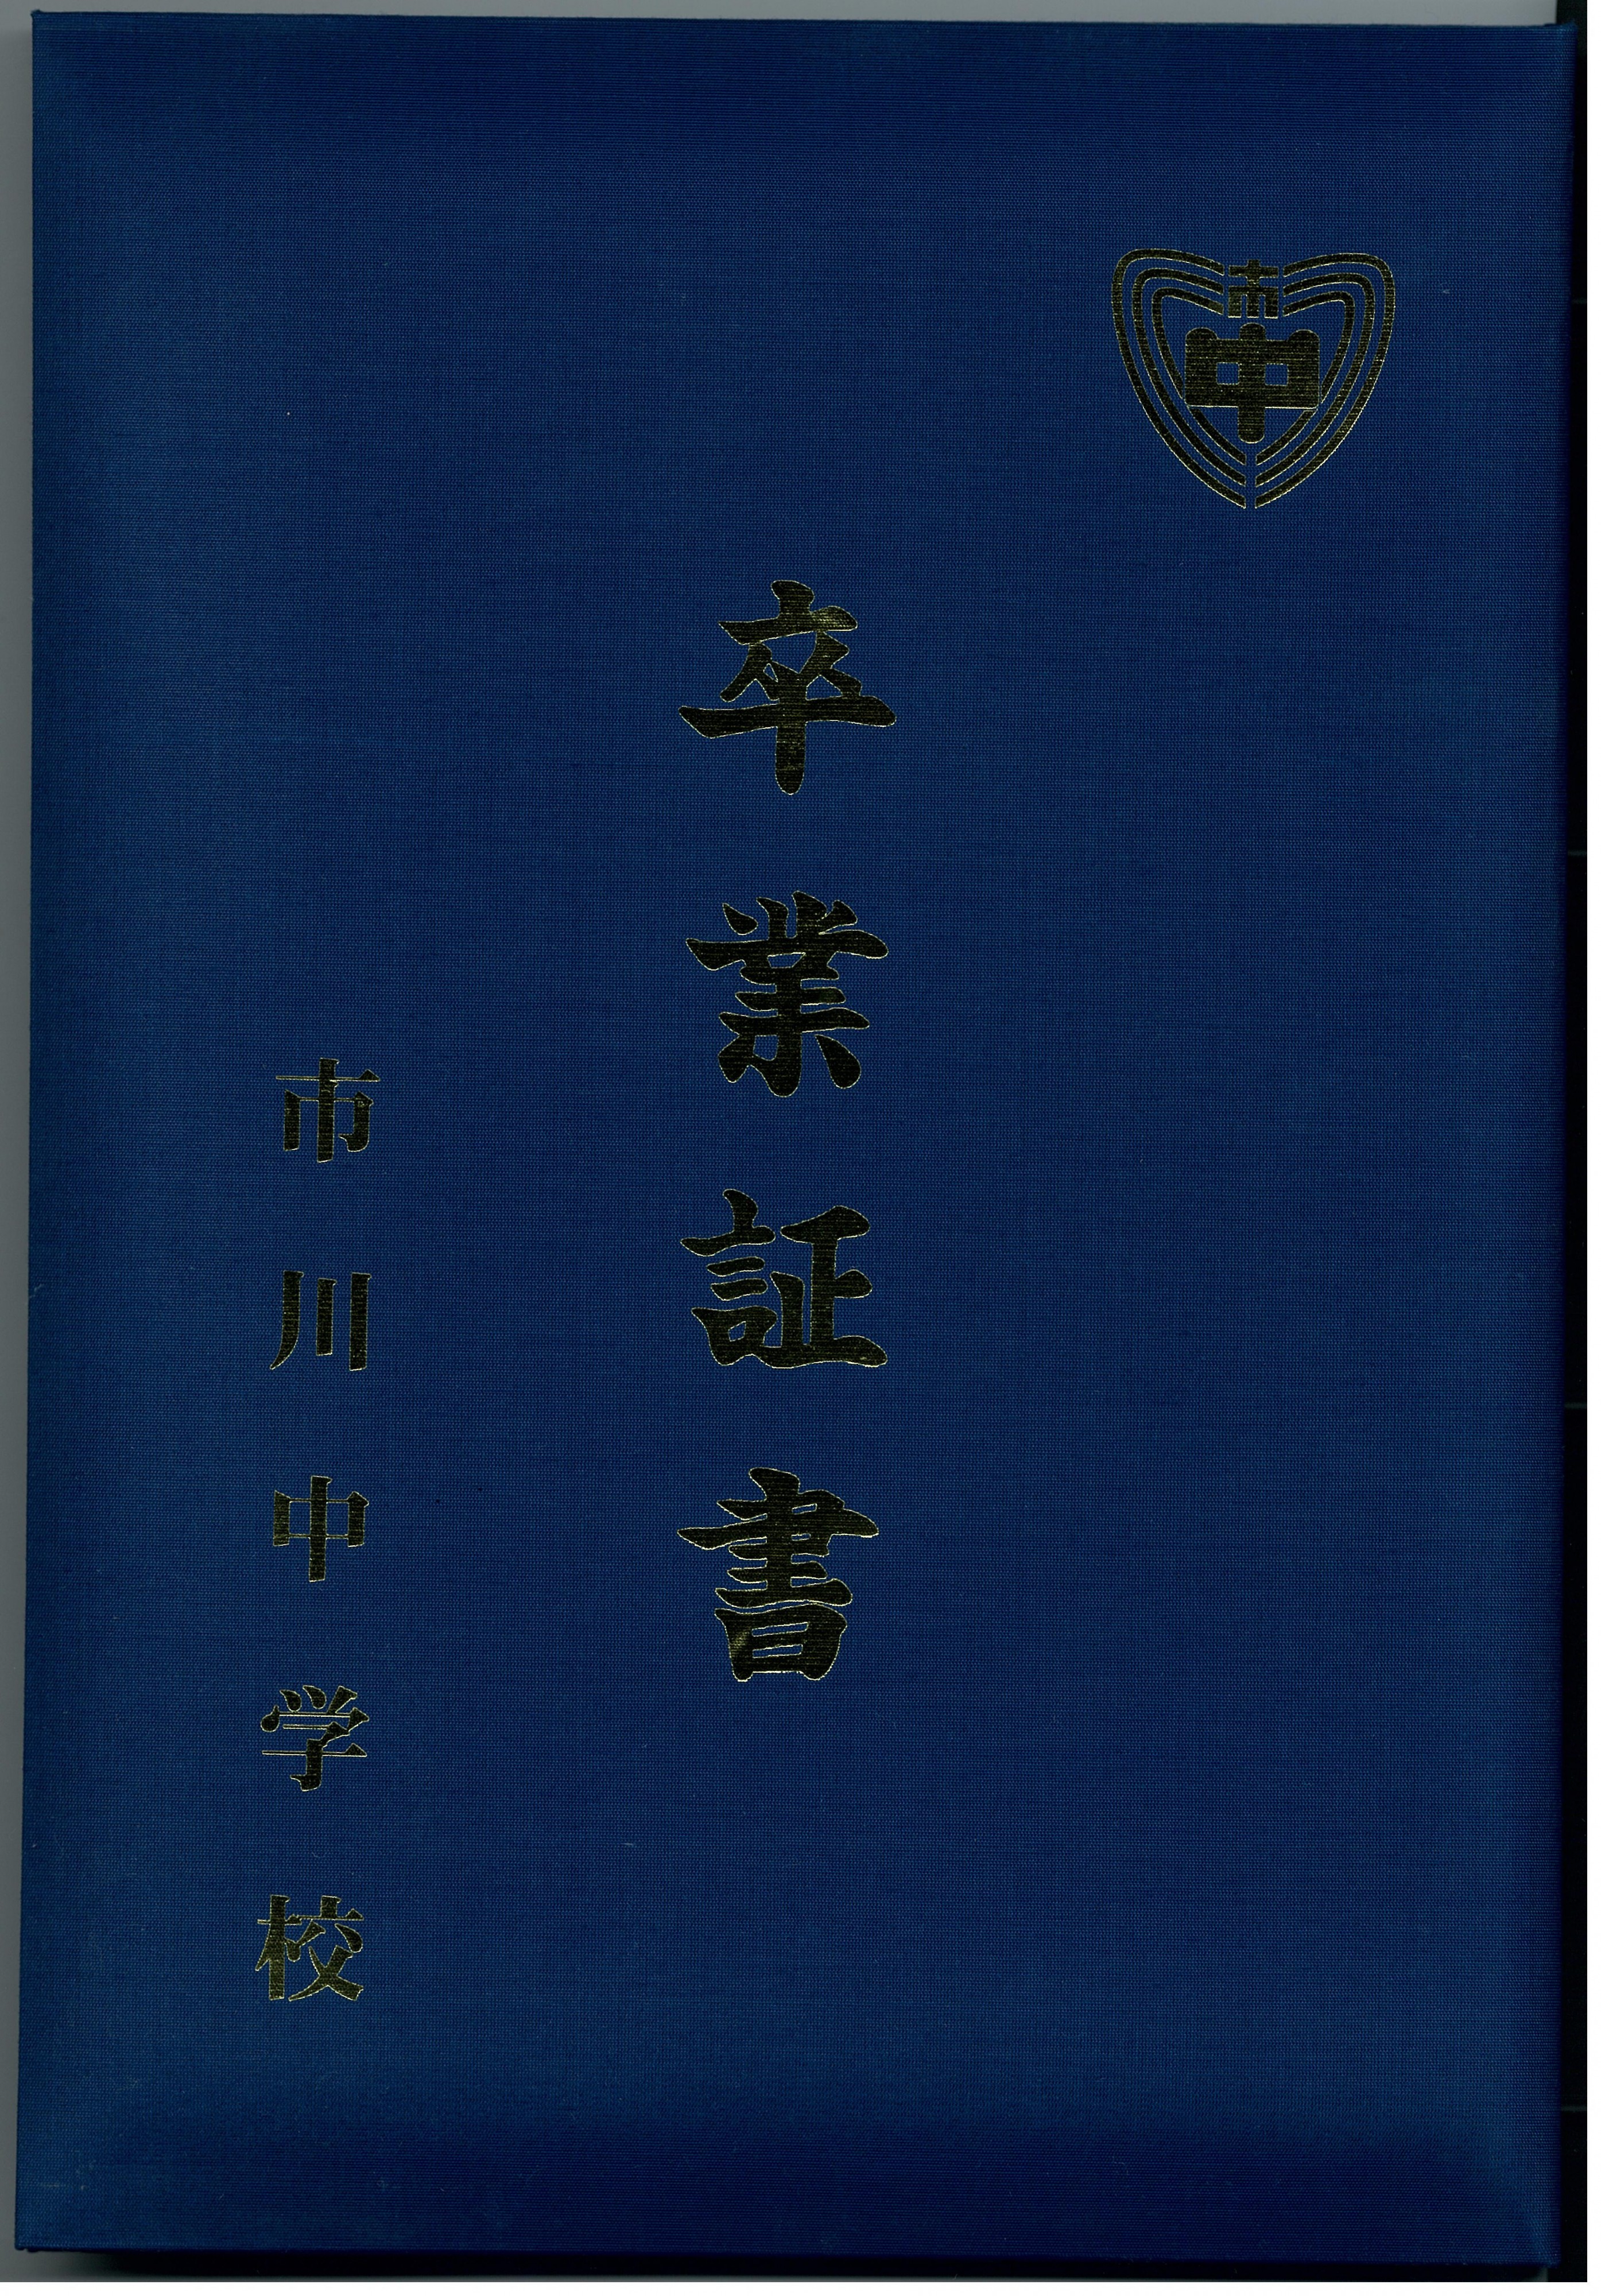 Diploma cover of Junior high school in Japan